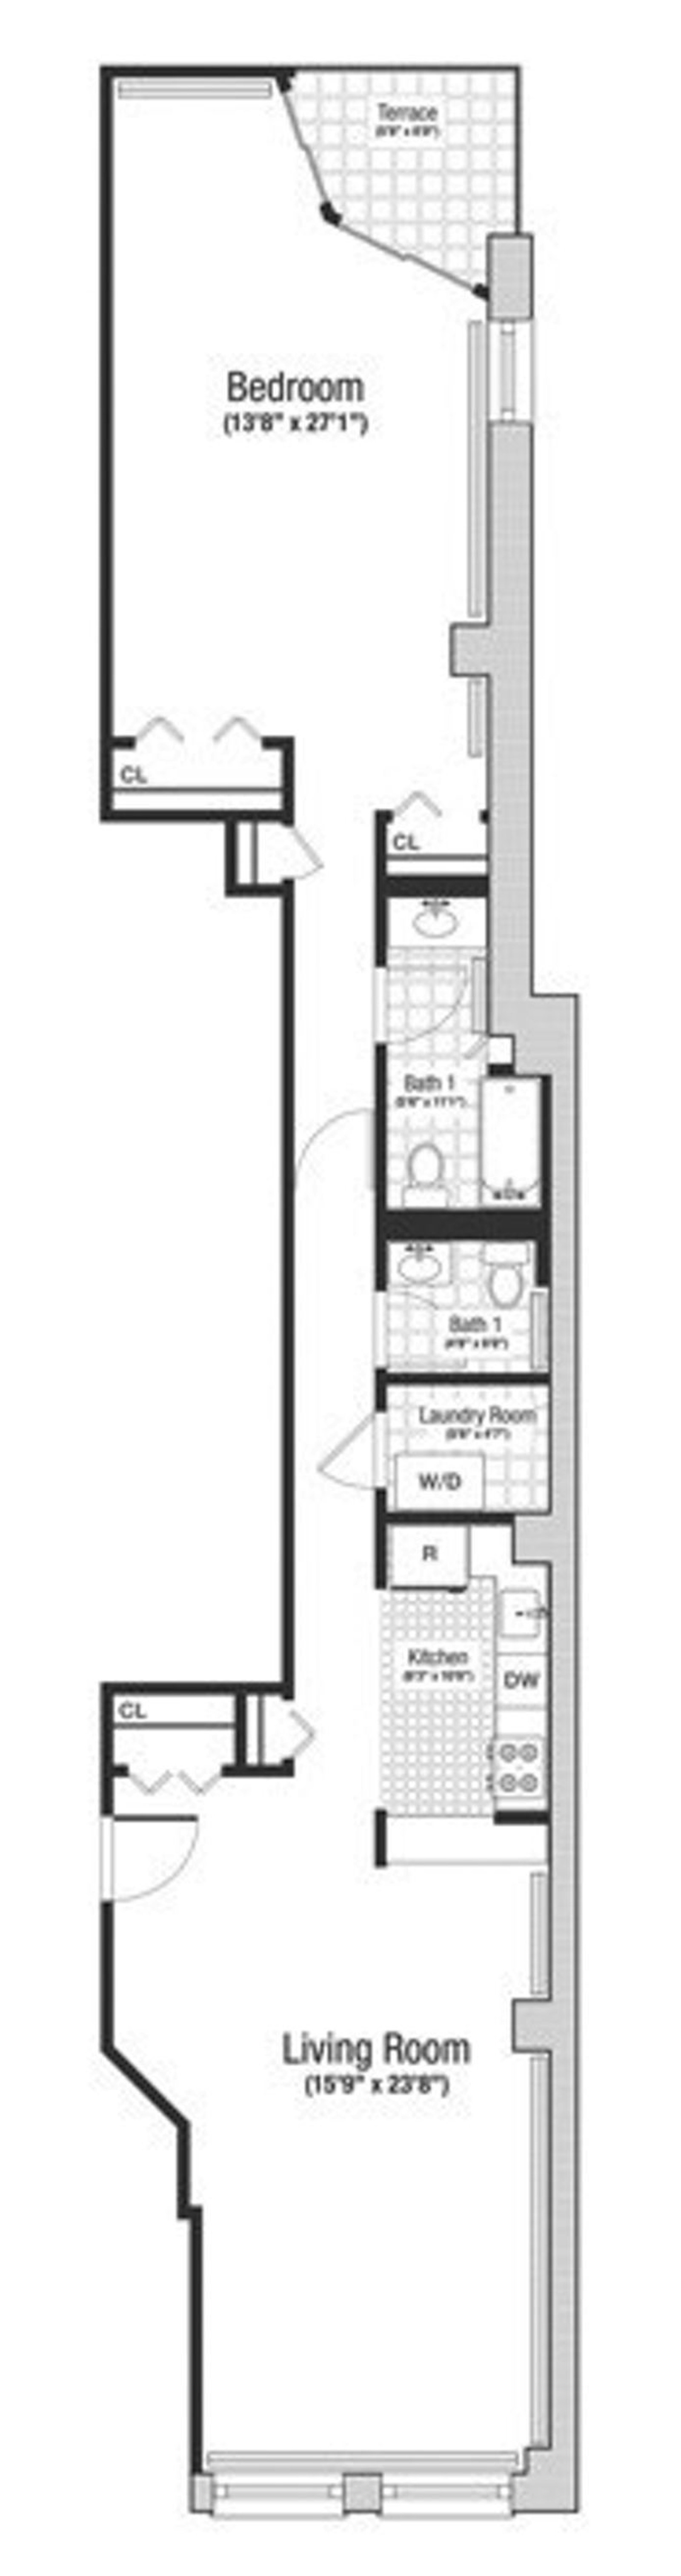 Floorplan for 36 Laight Street, 4A